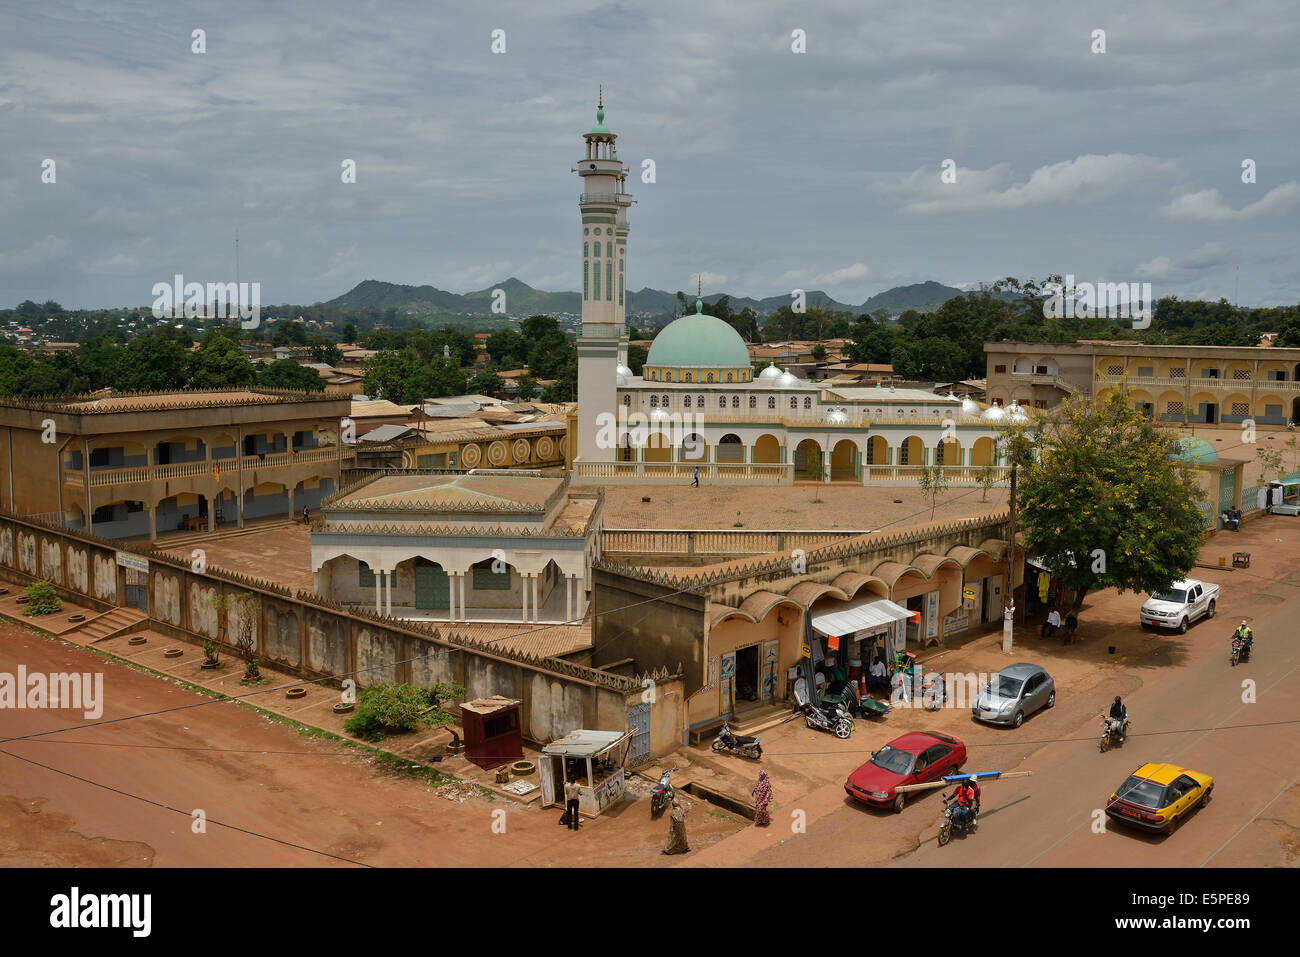 Mosque on the premises of the Franco-Arab, Islamic School, Ngaoundéré, Adamawa Region, Cameroon Stock Photo